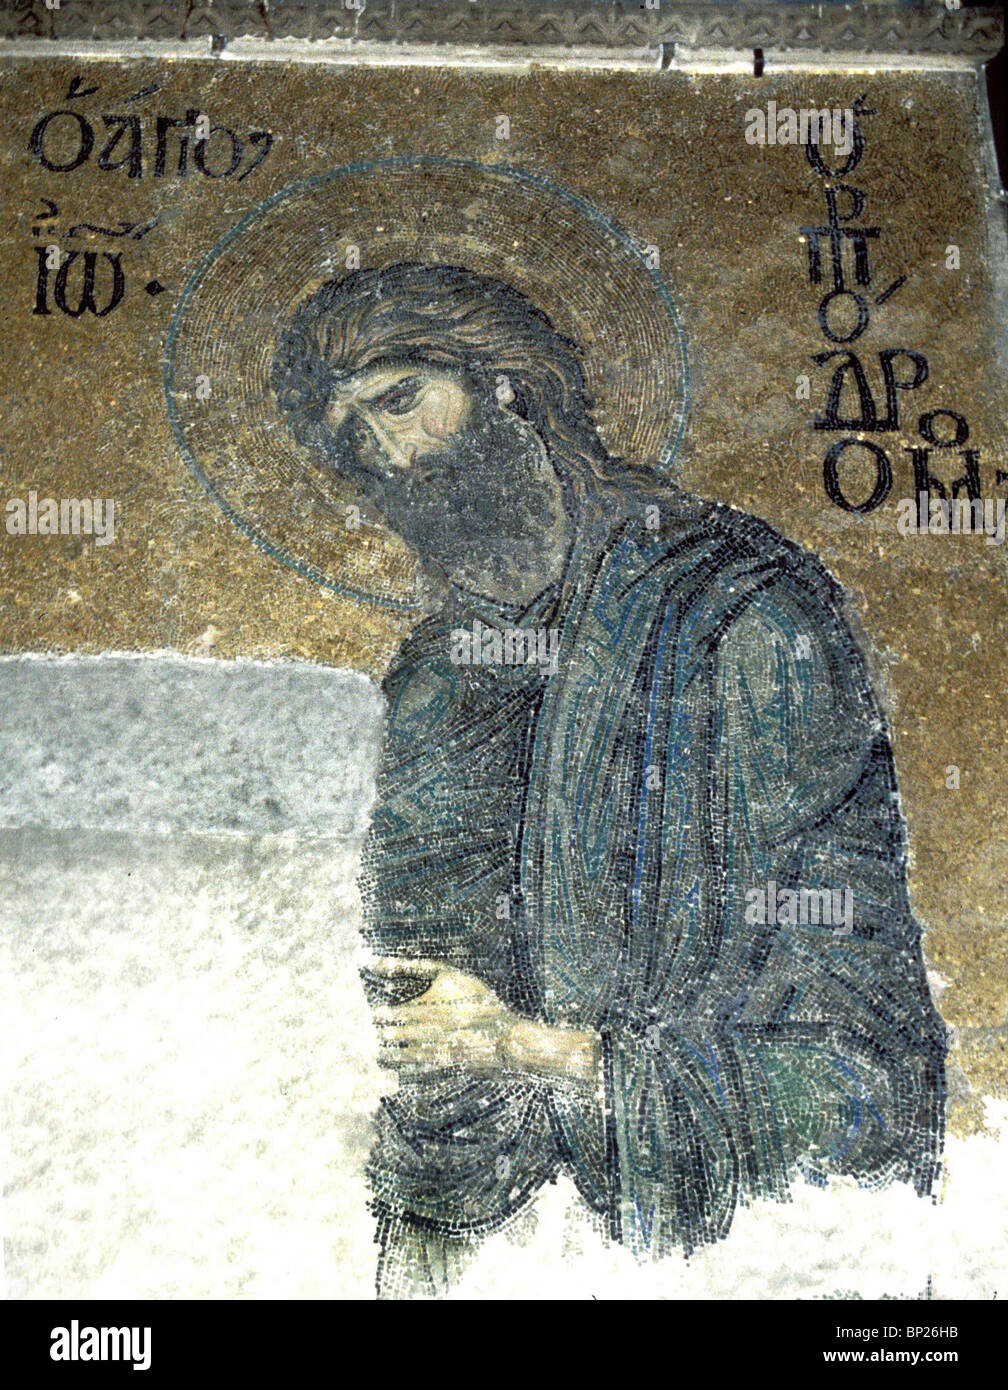 1095. JOHN THE BAPTIST, 9TH. C. MOSAIC FROM HAGIA SOPHIA, ISTAMBUL Stock Photo